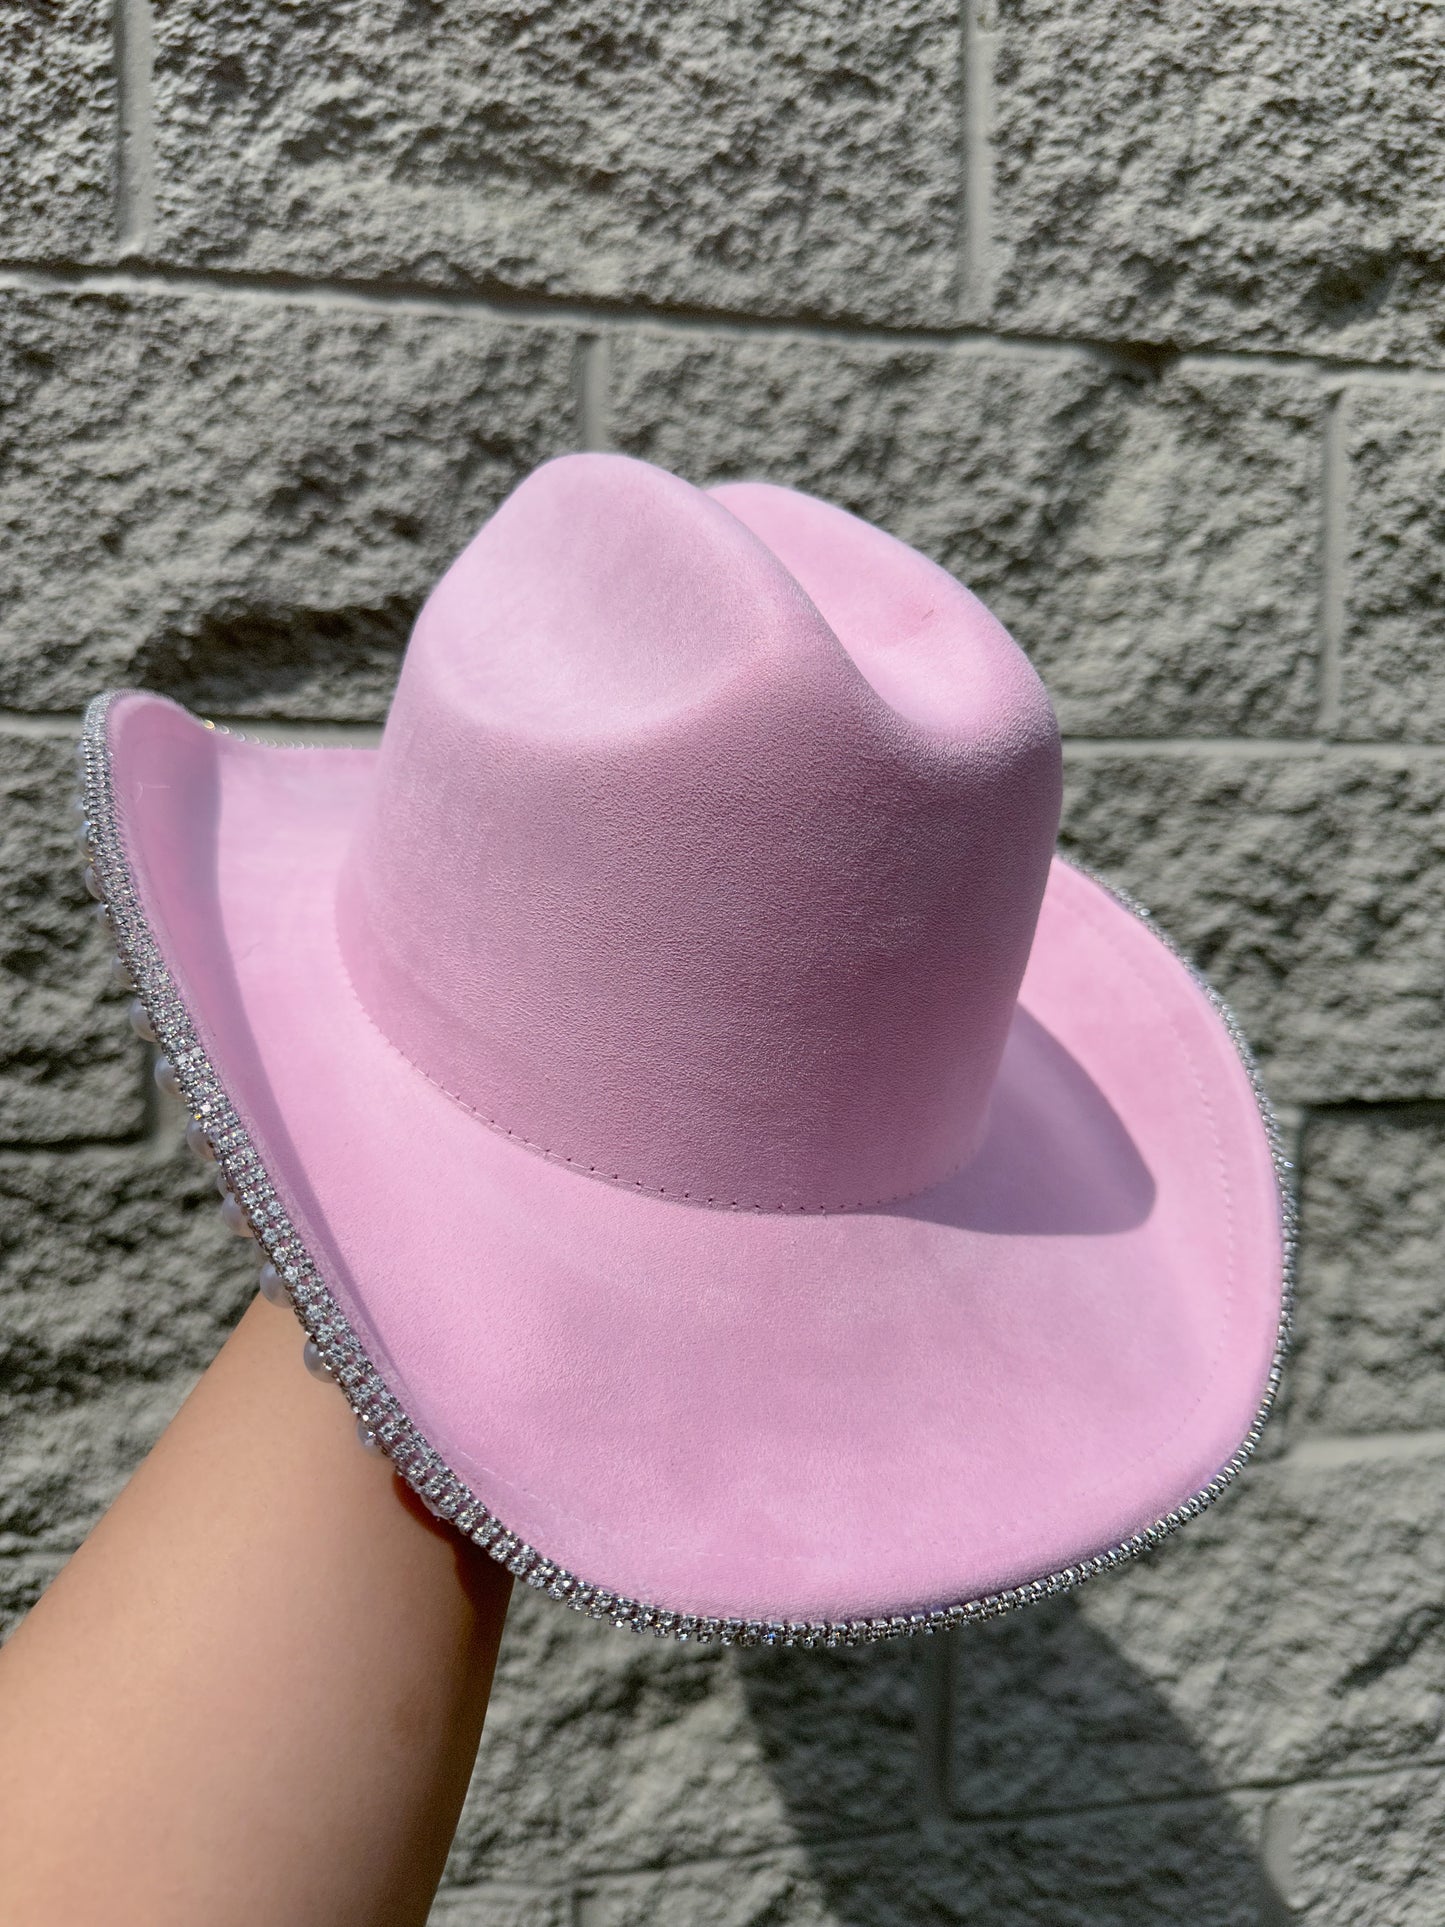 Jasmine Rhinestone/Pearl Western Hat - Pink